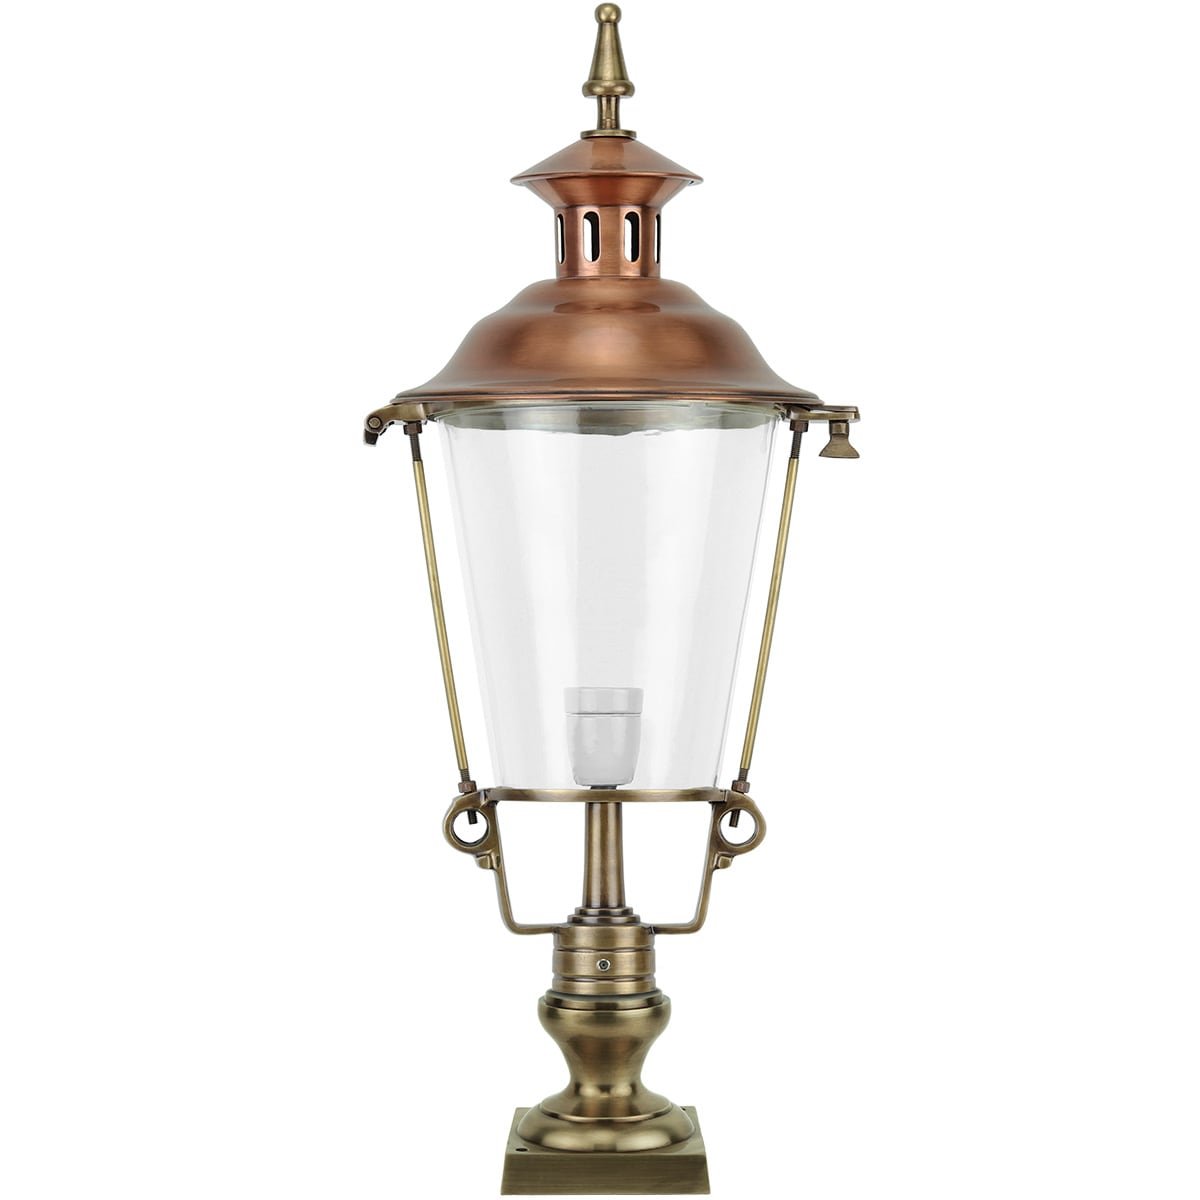 Pedestal lantern Bleskensgraaf brass - 83 cm